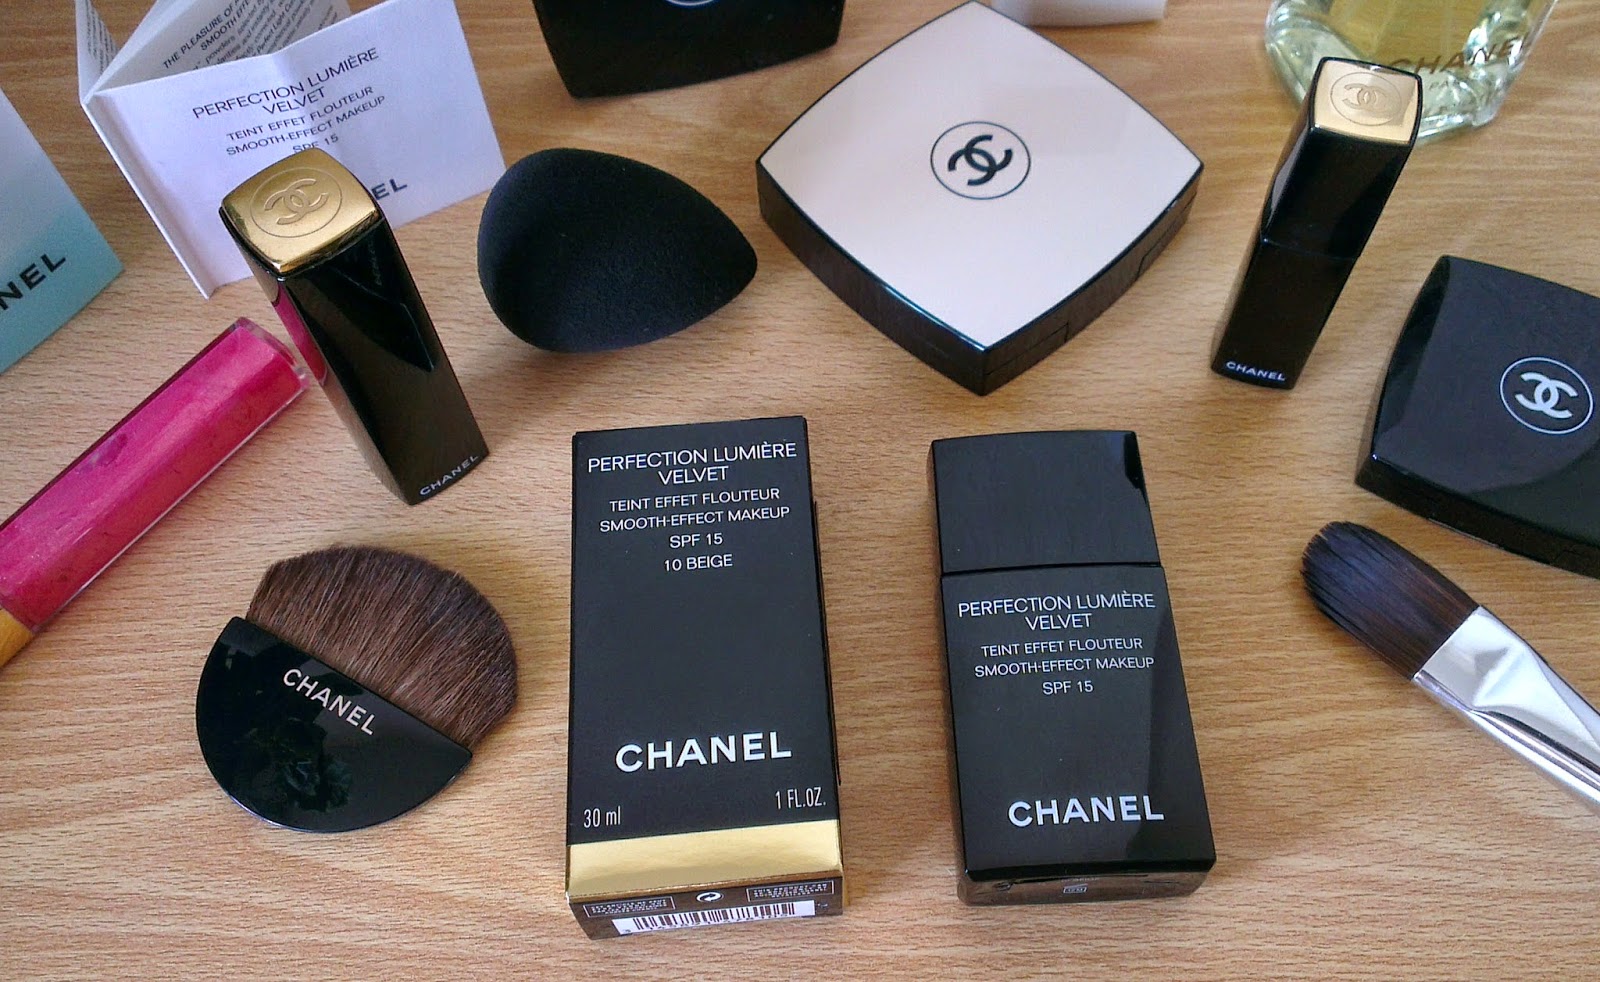 Aesthetic Tips: Бархатная революция: Chanel Perfection Lumiere Velvet  Smooth Effect Makeup SPF15